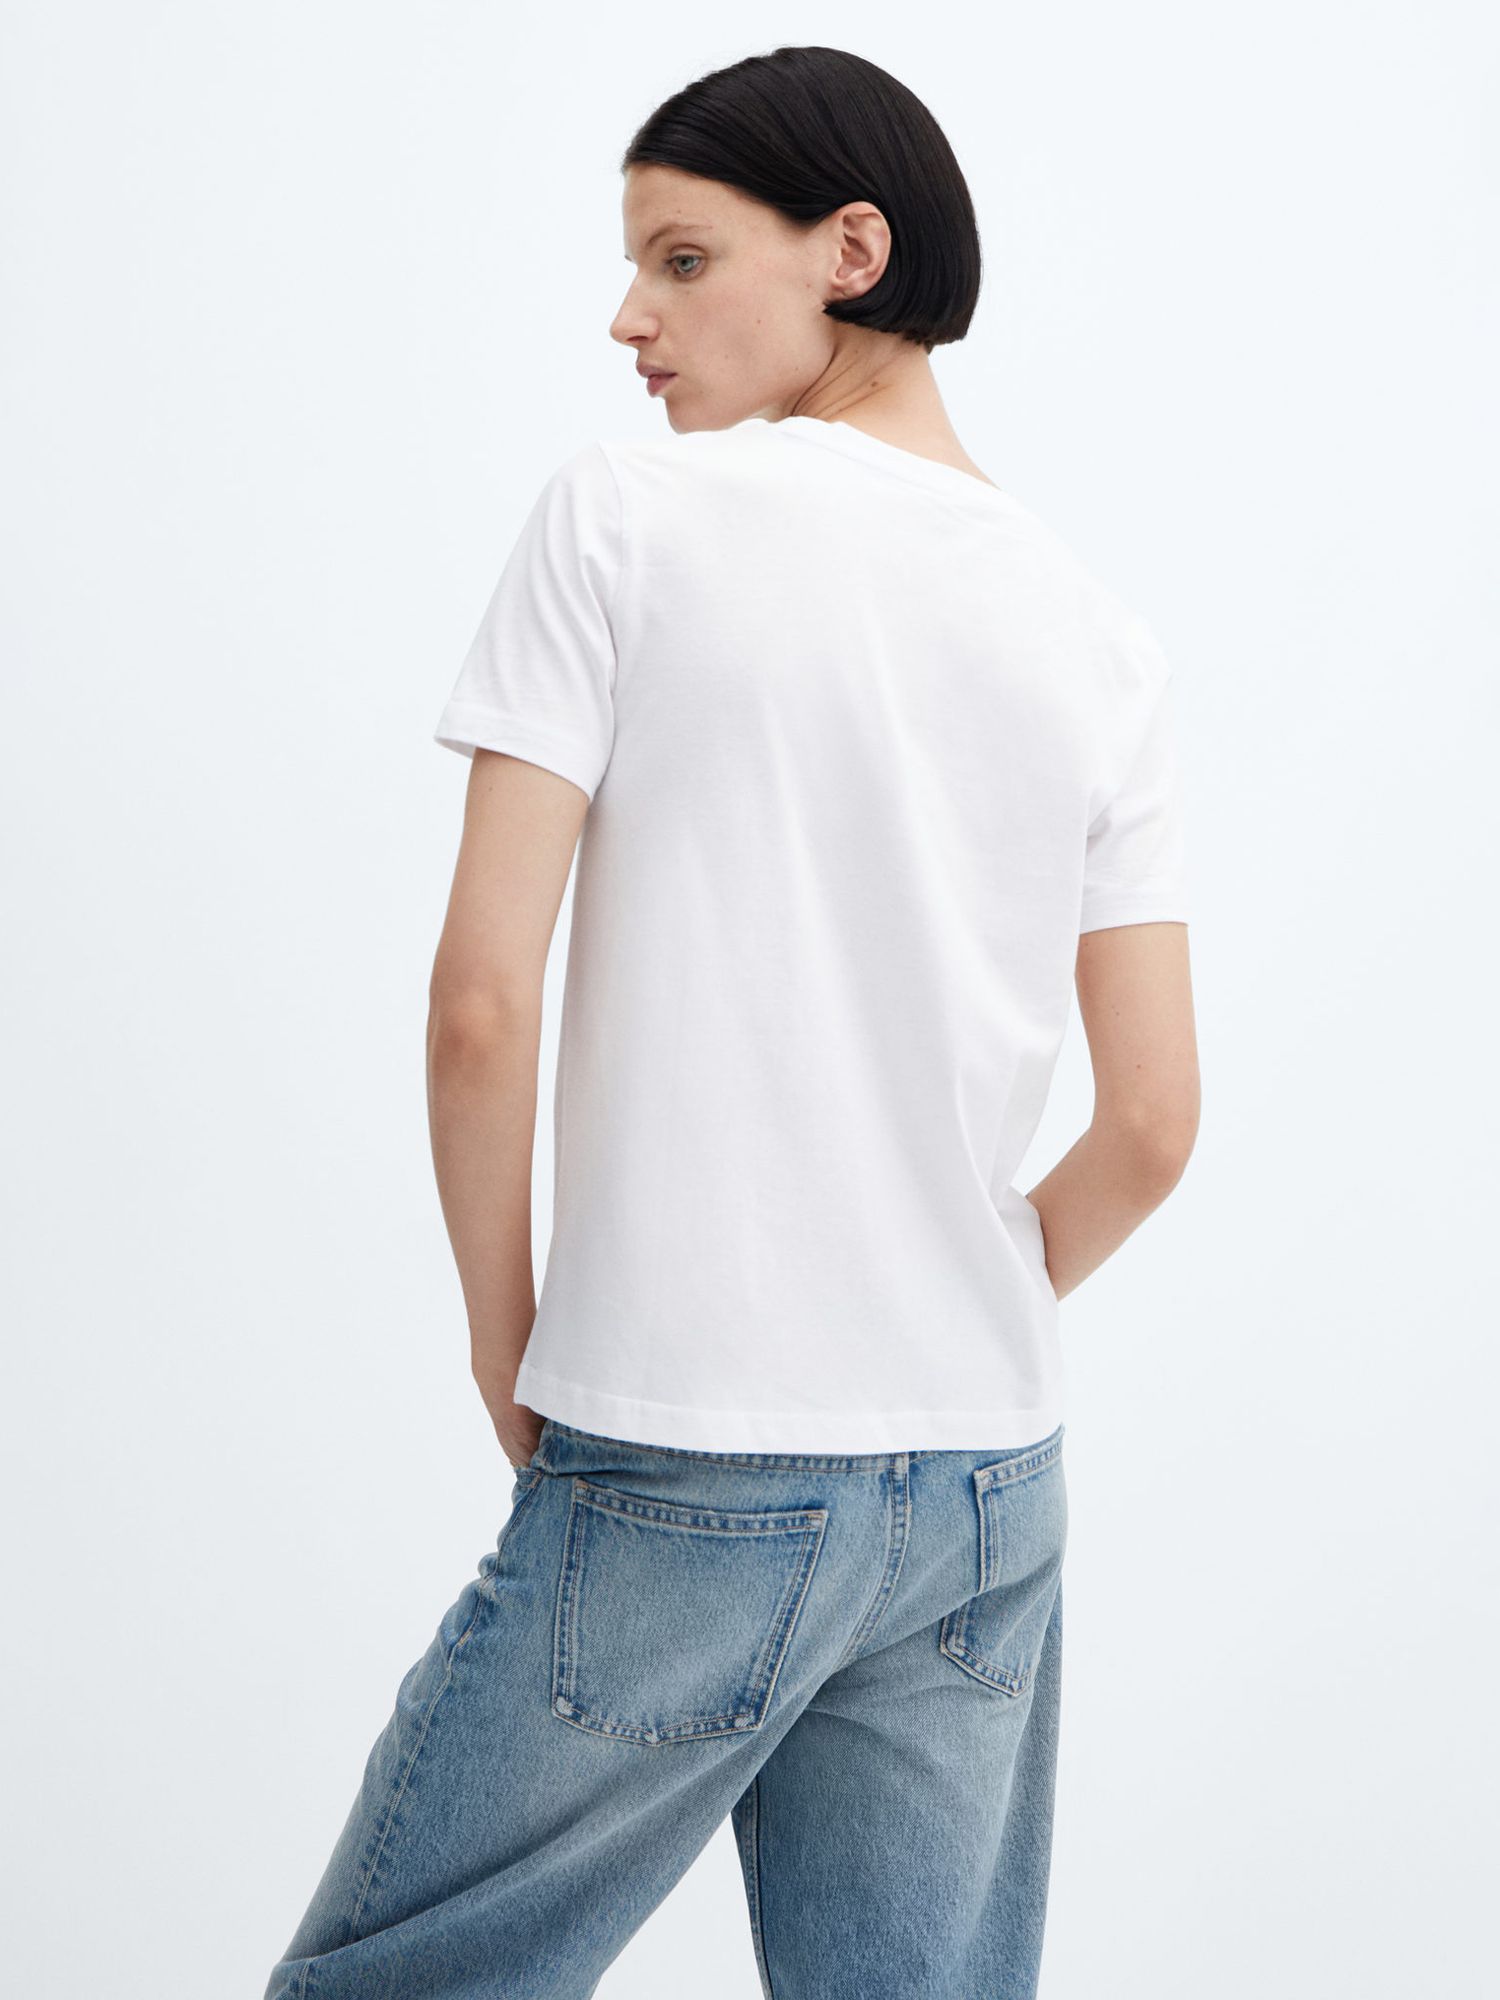 Mango Chalaca Cotton T-Shirt, White, 5XL